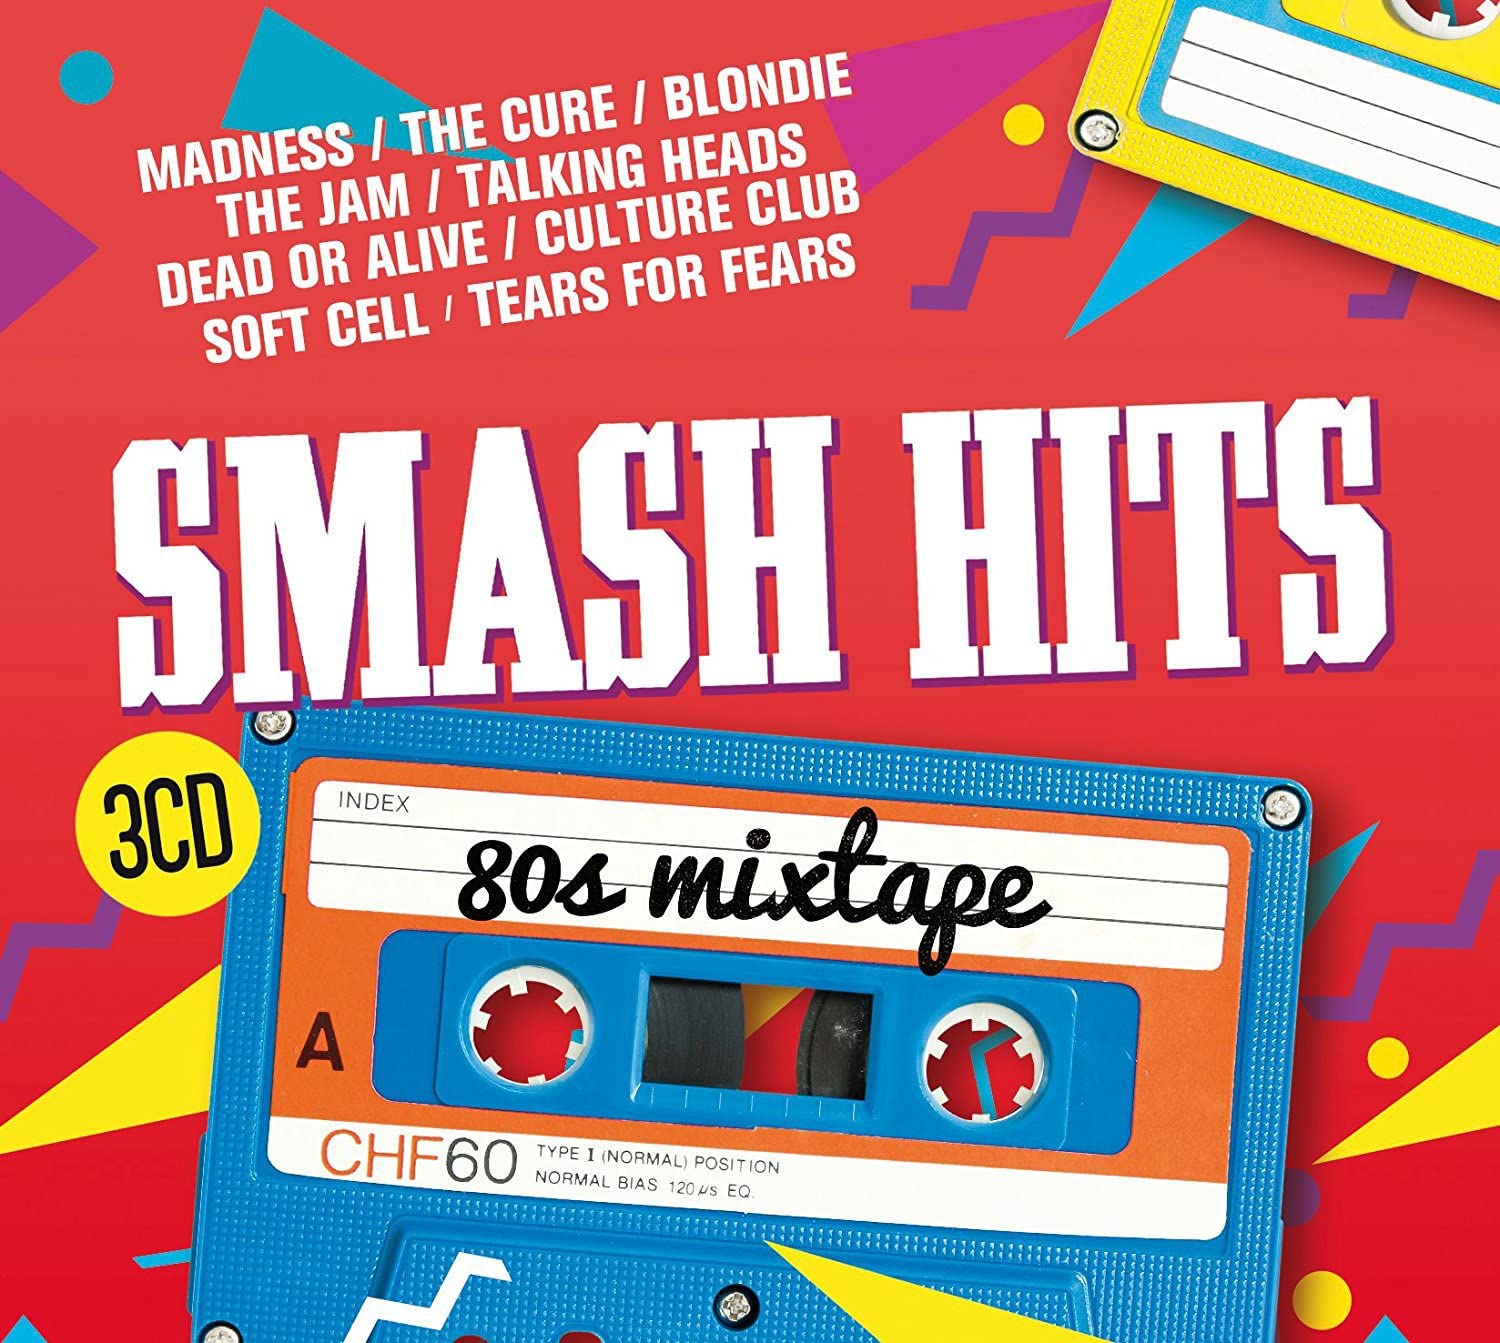 Smash Hits 80s Mixtape 3 x CD SET